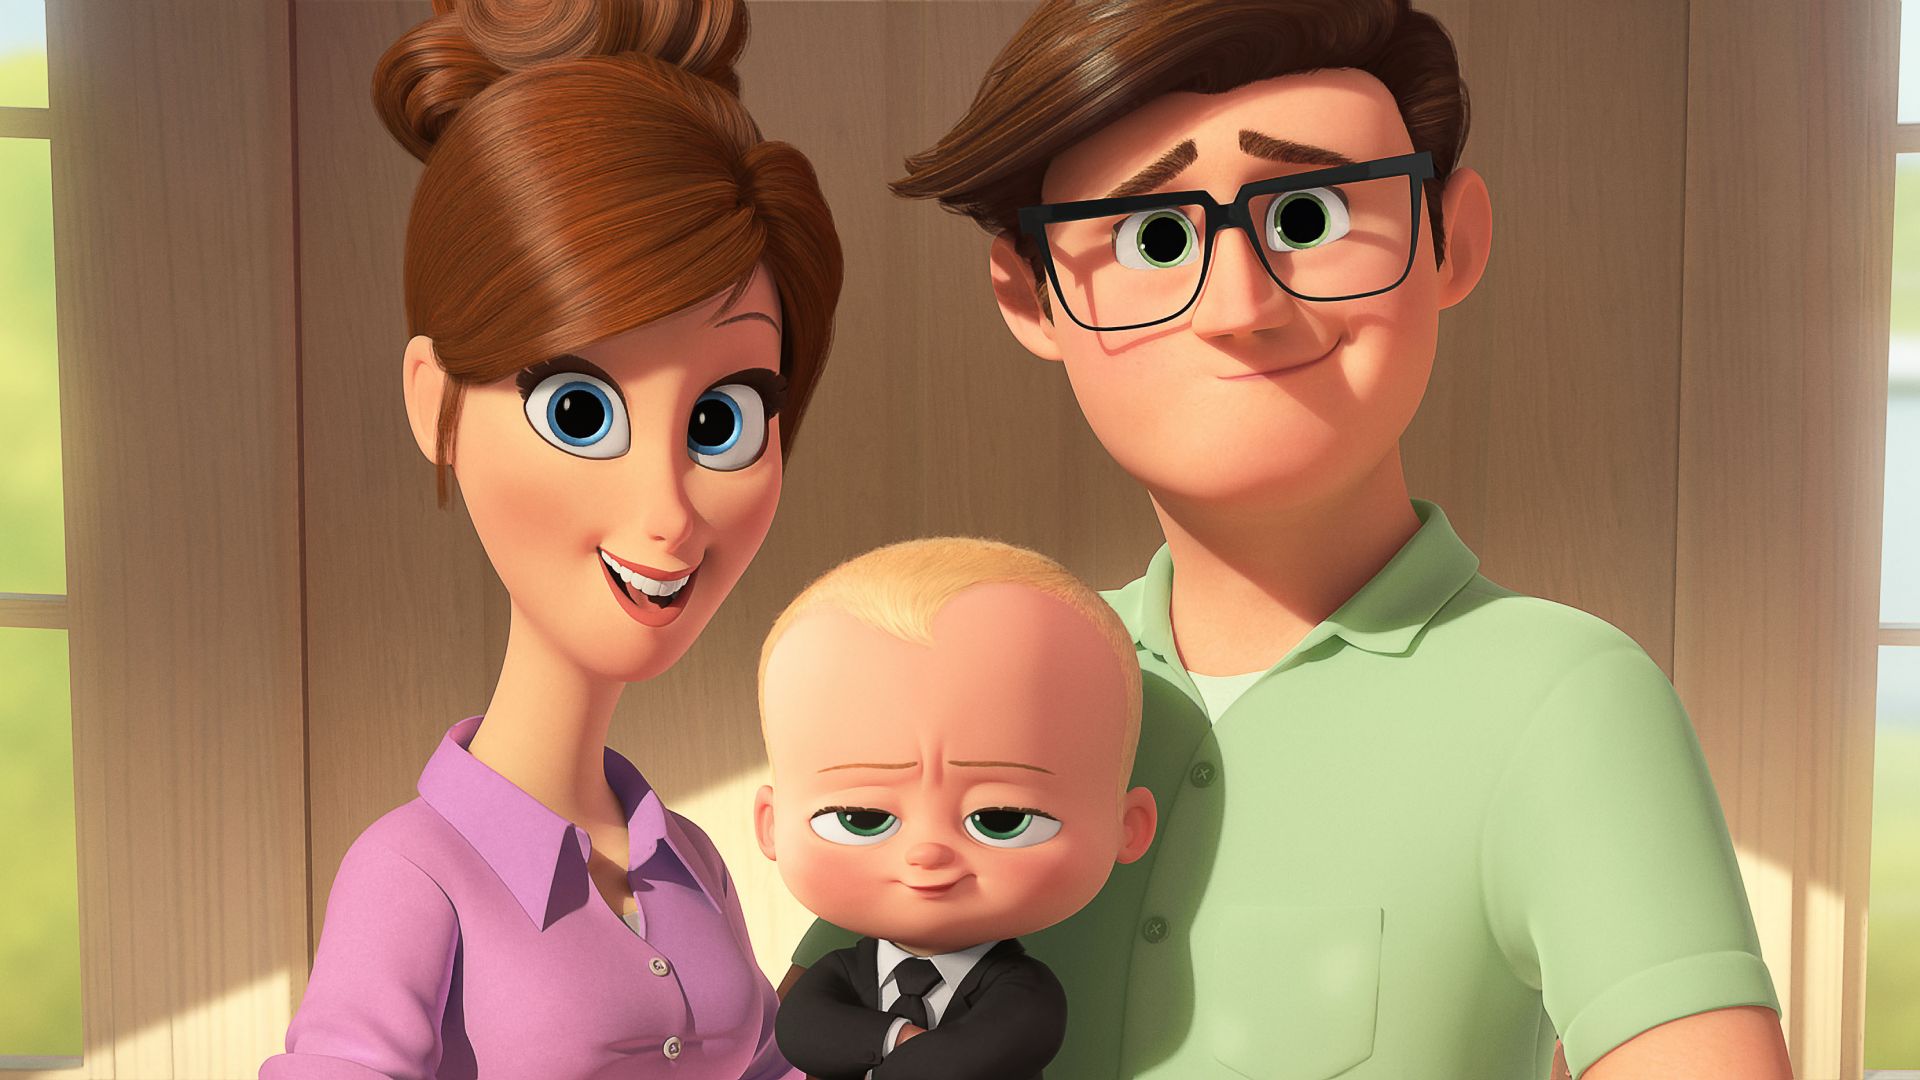 Ребёнок-босс, семья, ребенок, лучшие мультфильмы, The Boss Baby, Baby, family, best animation movies (horizontal)